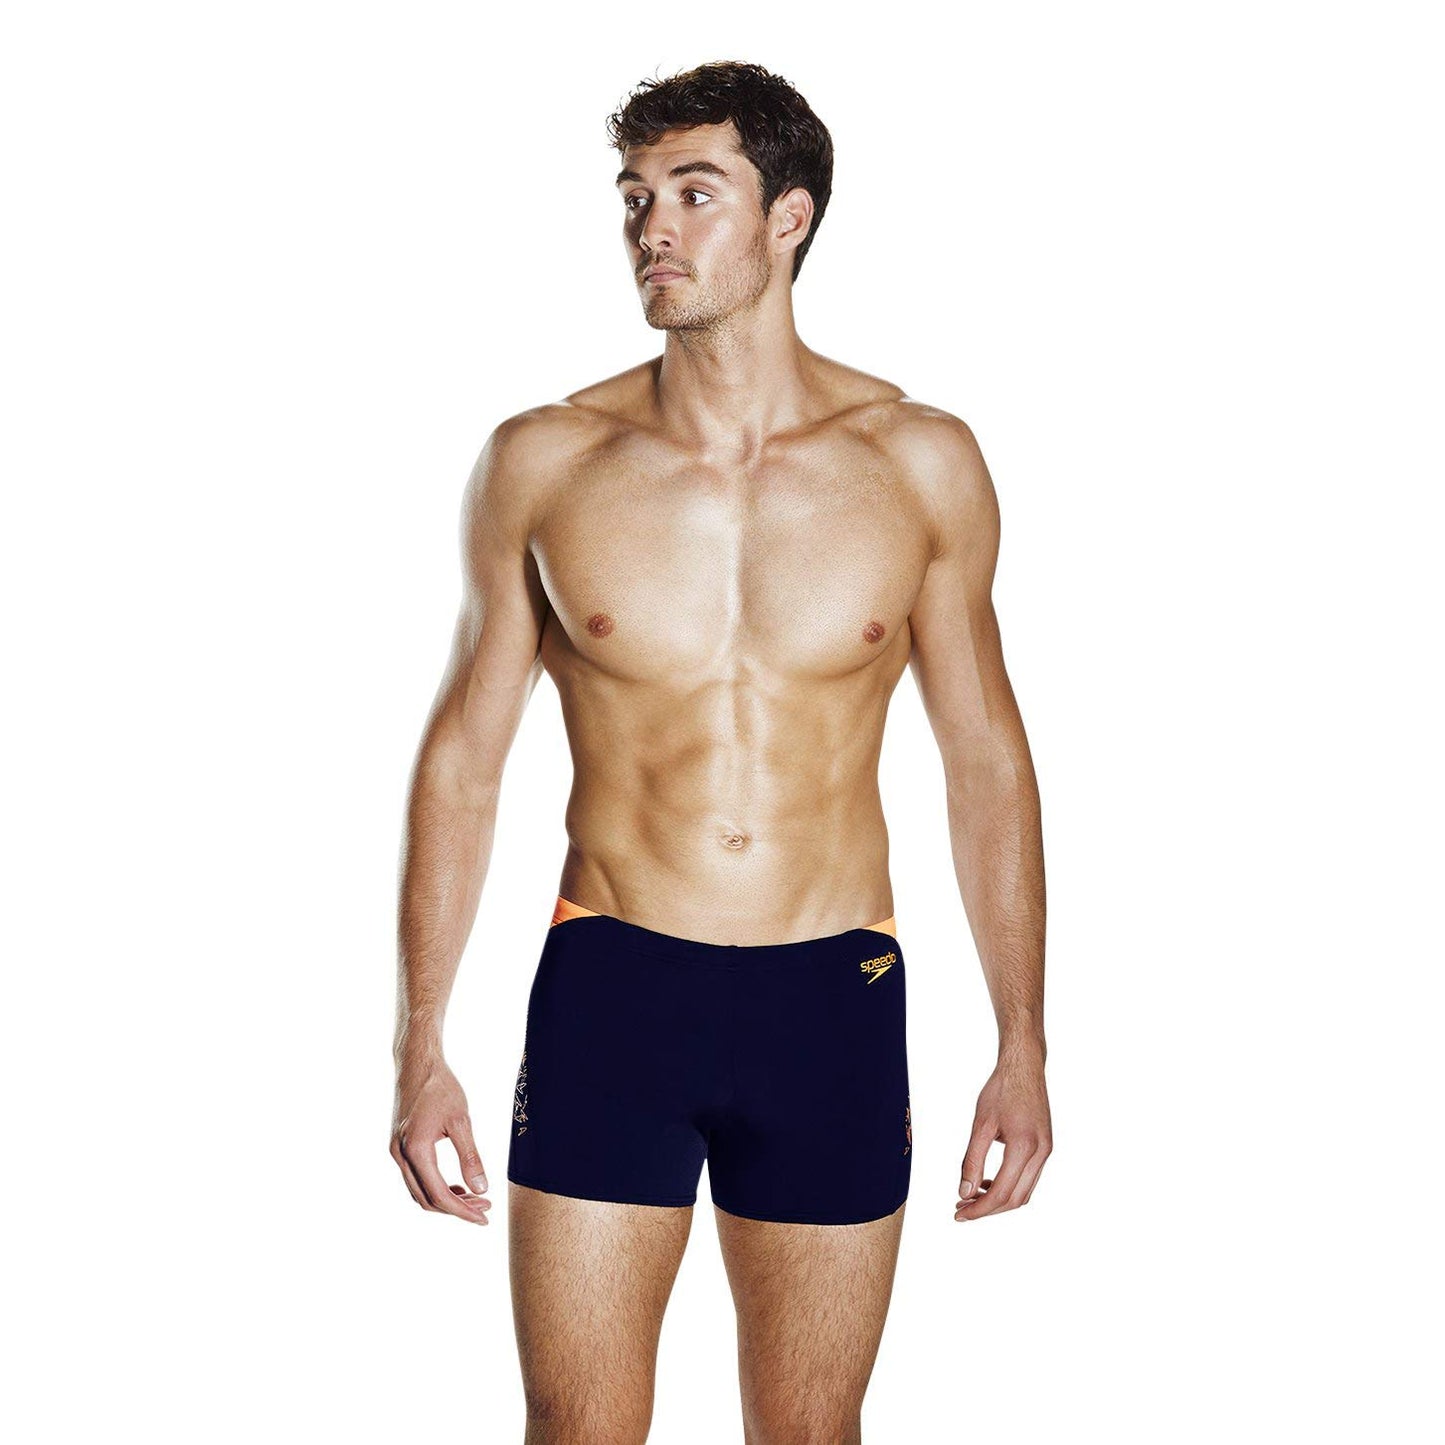 Speedo Boom Splice Swimming Aquashort for Men, Navy/Pure Orange - Best Price online Prokicksports.com